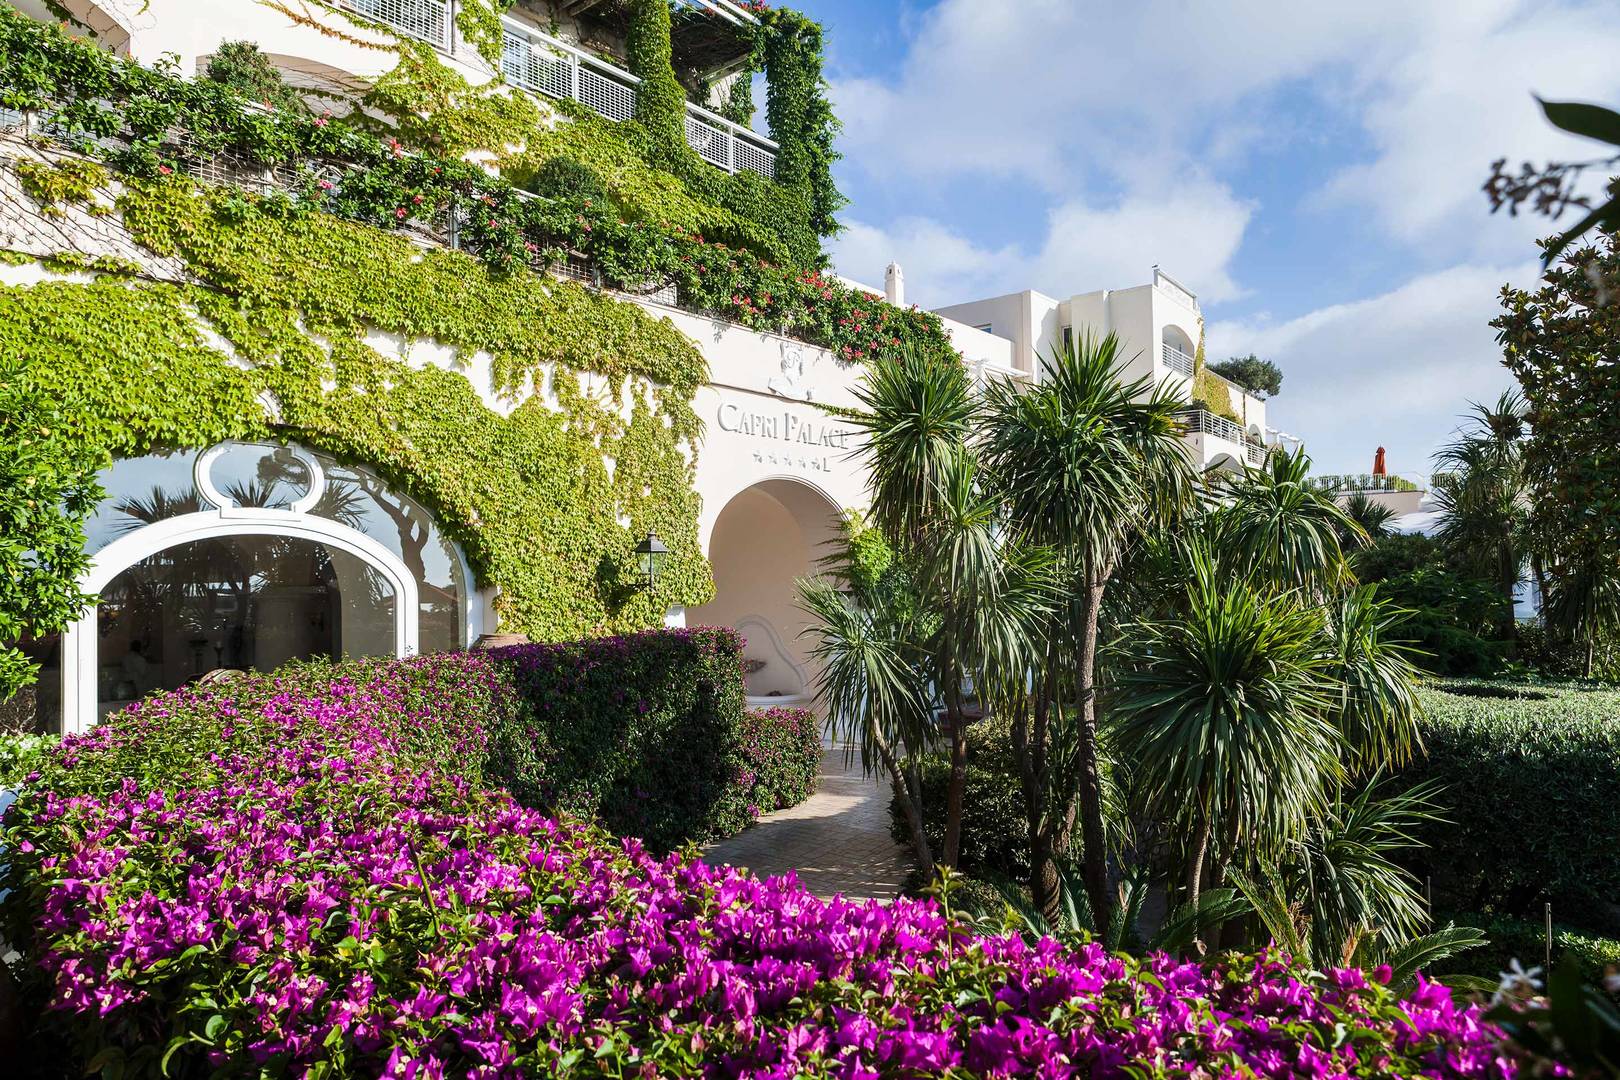 Capri Palace Jumeirah embodies the grandeur of refinement in the heart of Anacapri